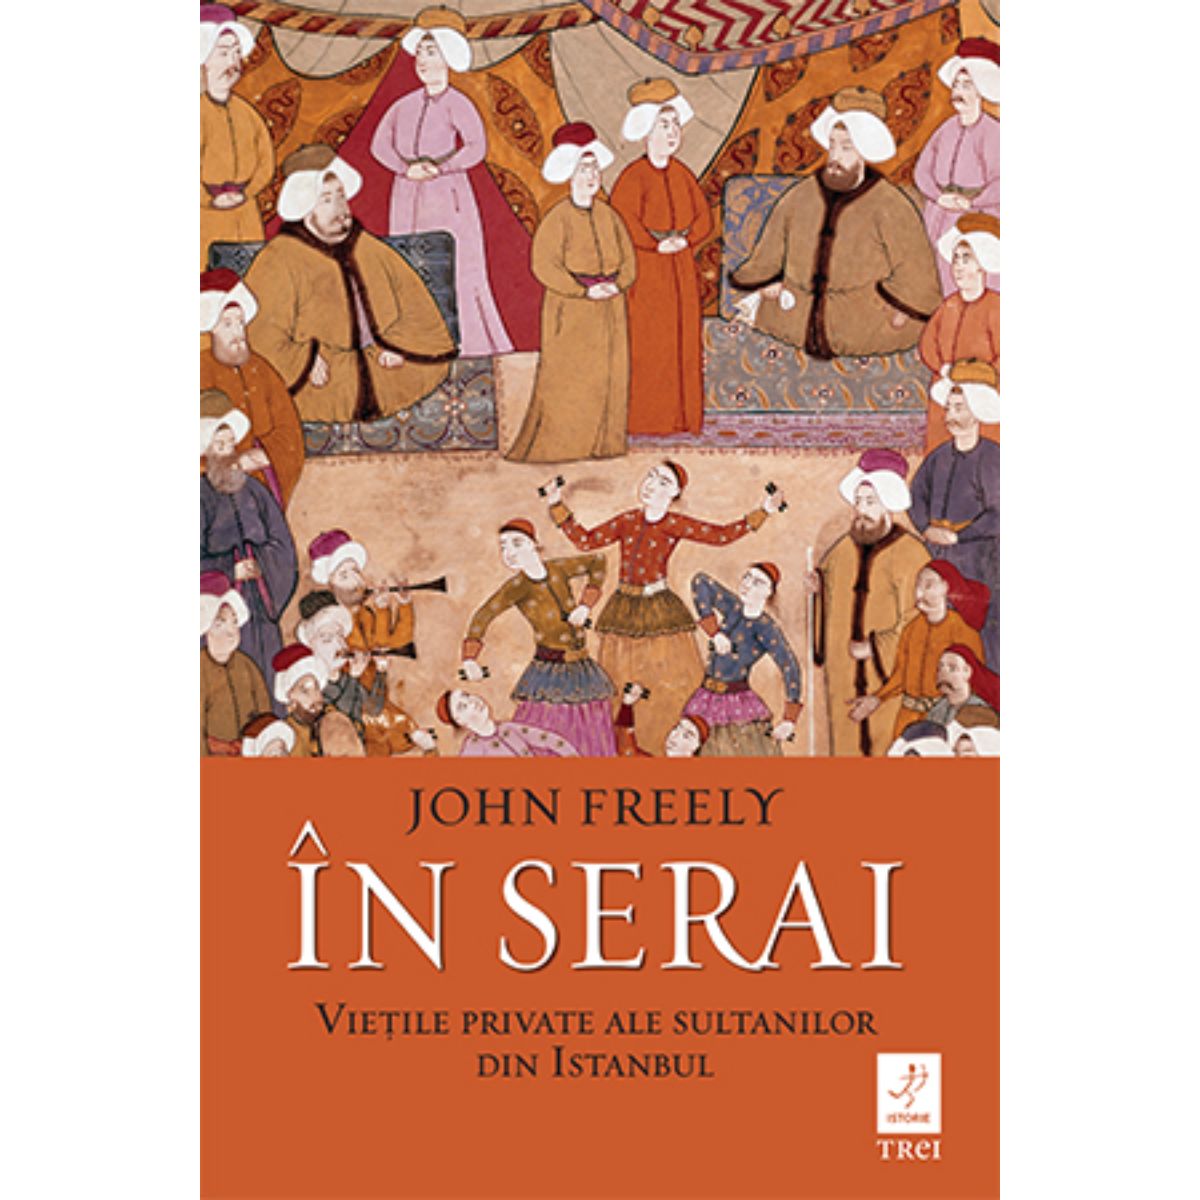 In Serai, John Freely